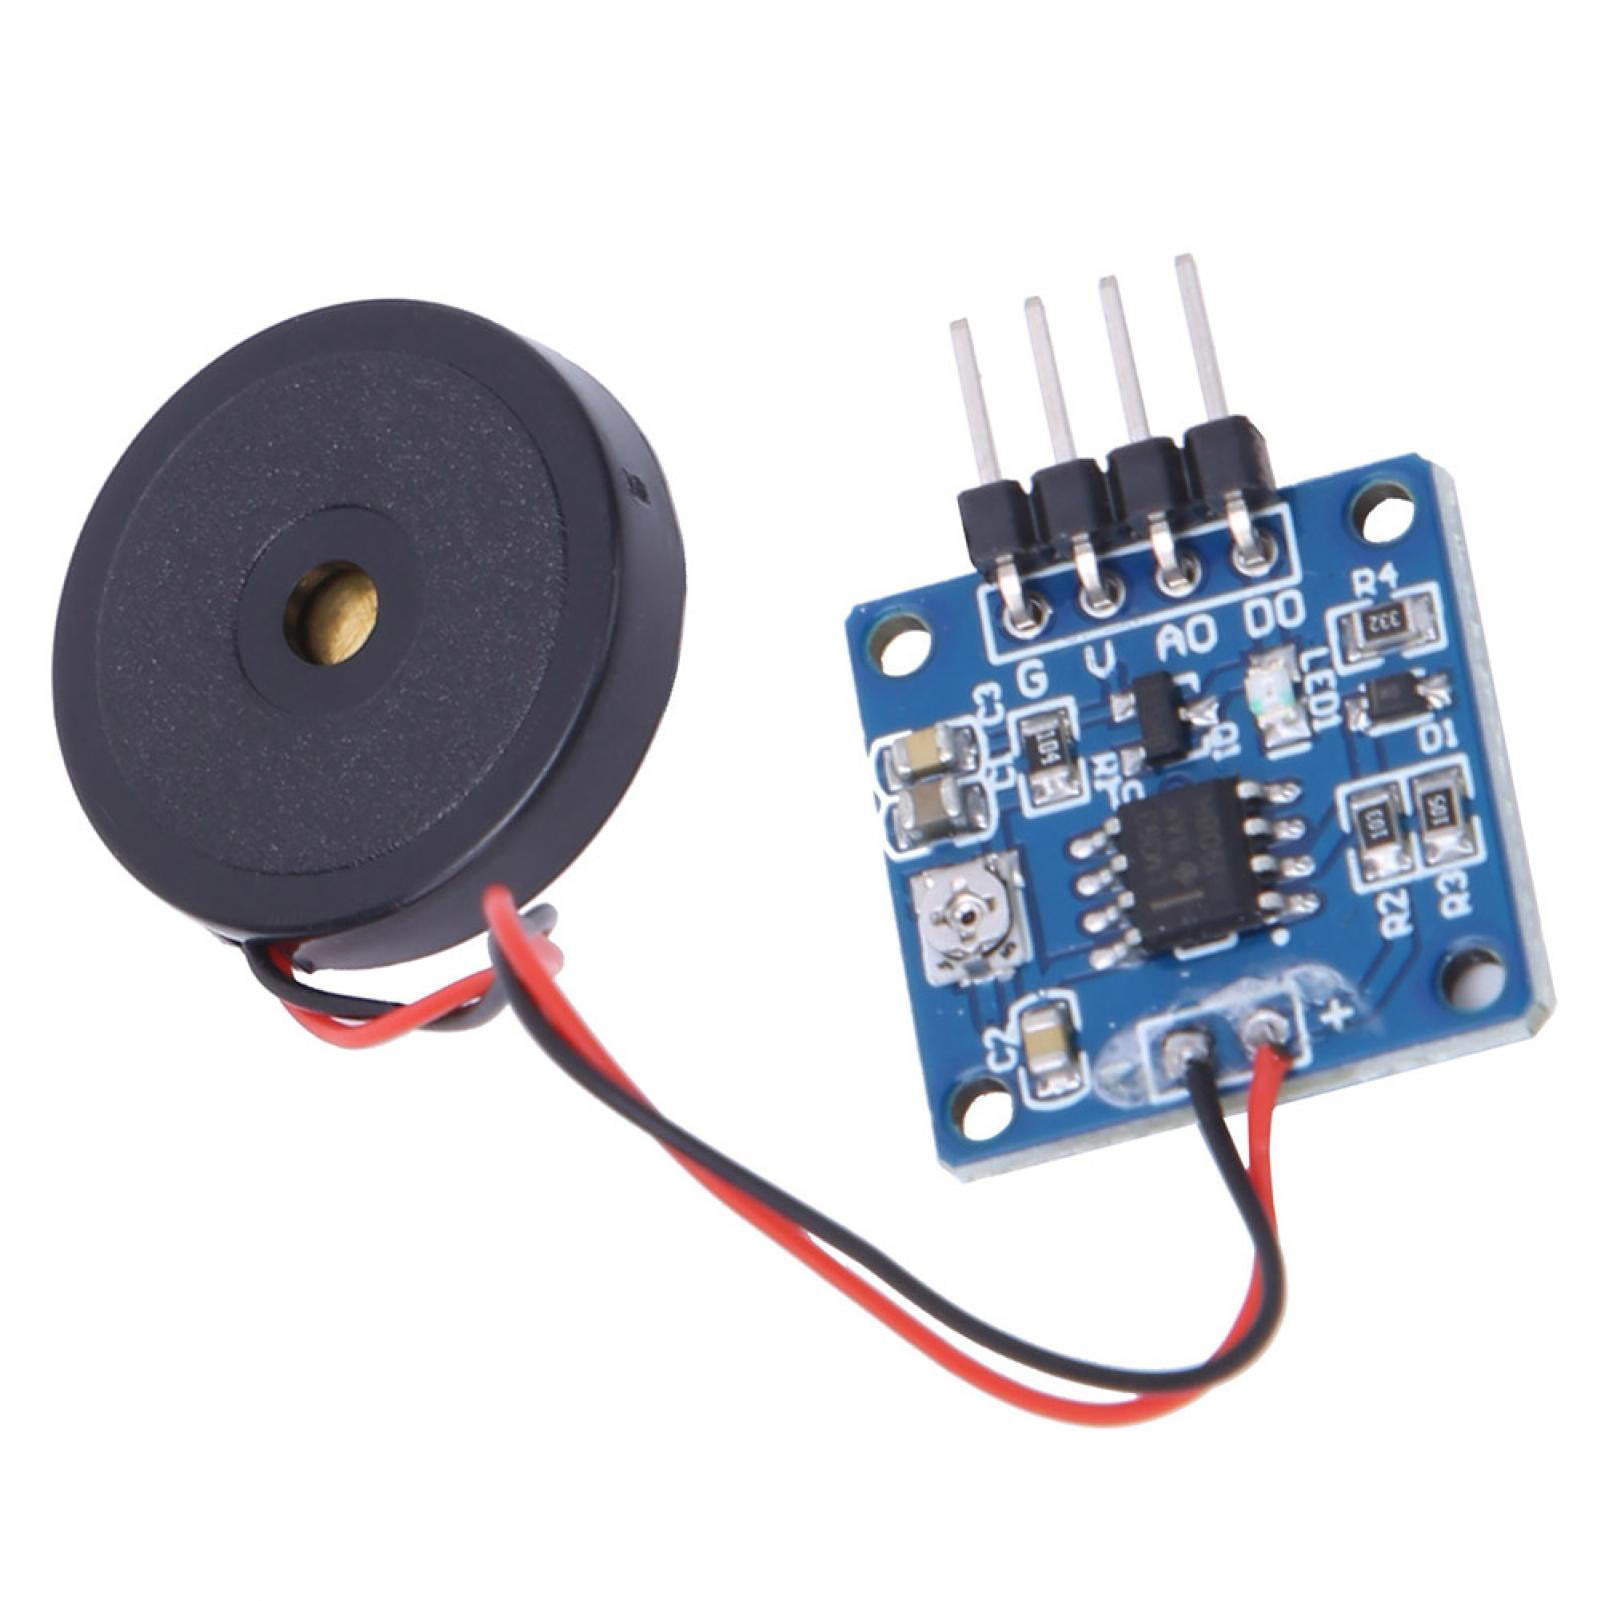 5.0V DC AD/DO Piezoelectric Vibration Tapping Sensor Vibration Switch Module 